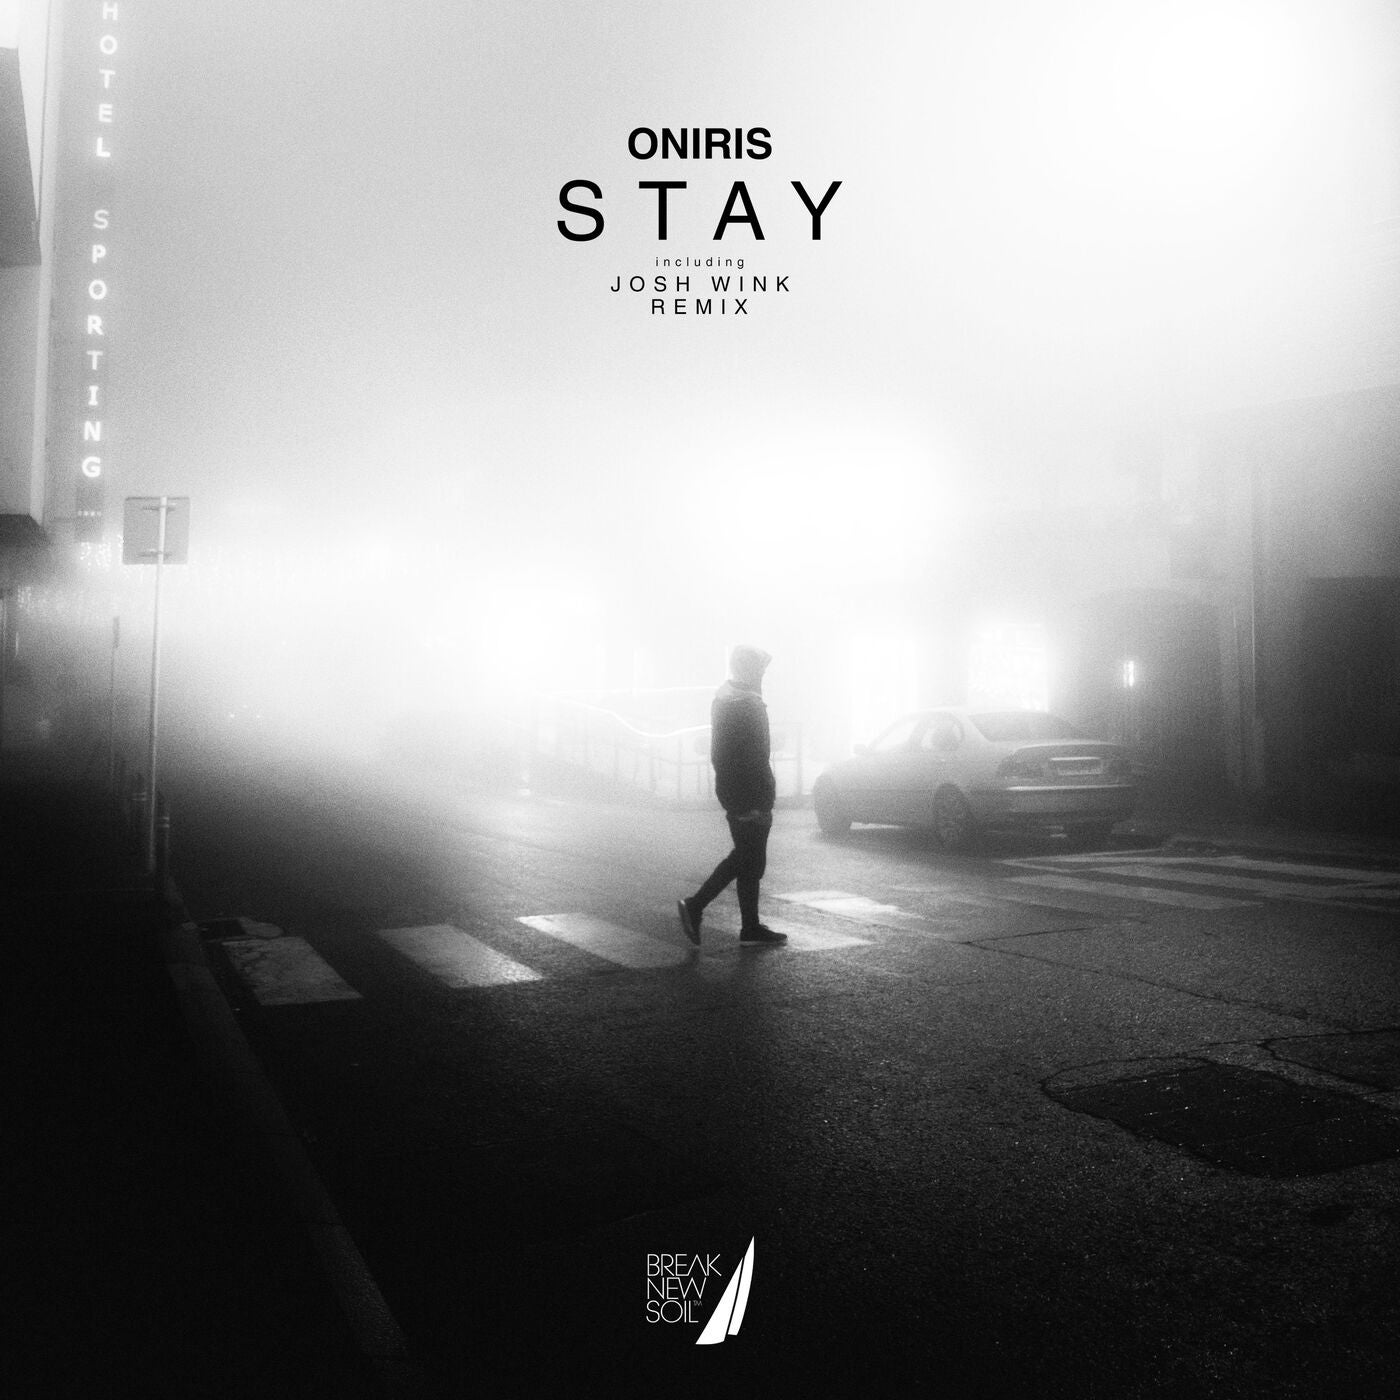 Stay - The Josh Wink Remixes